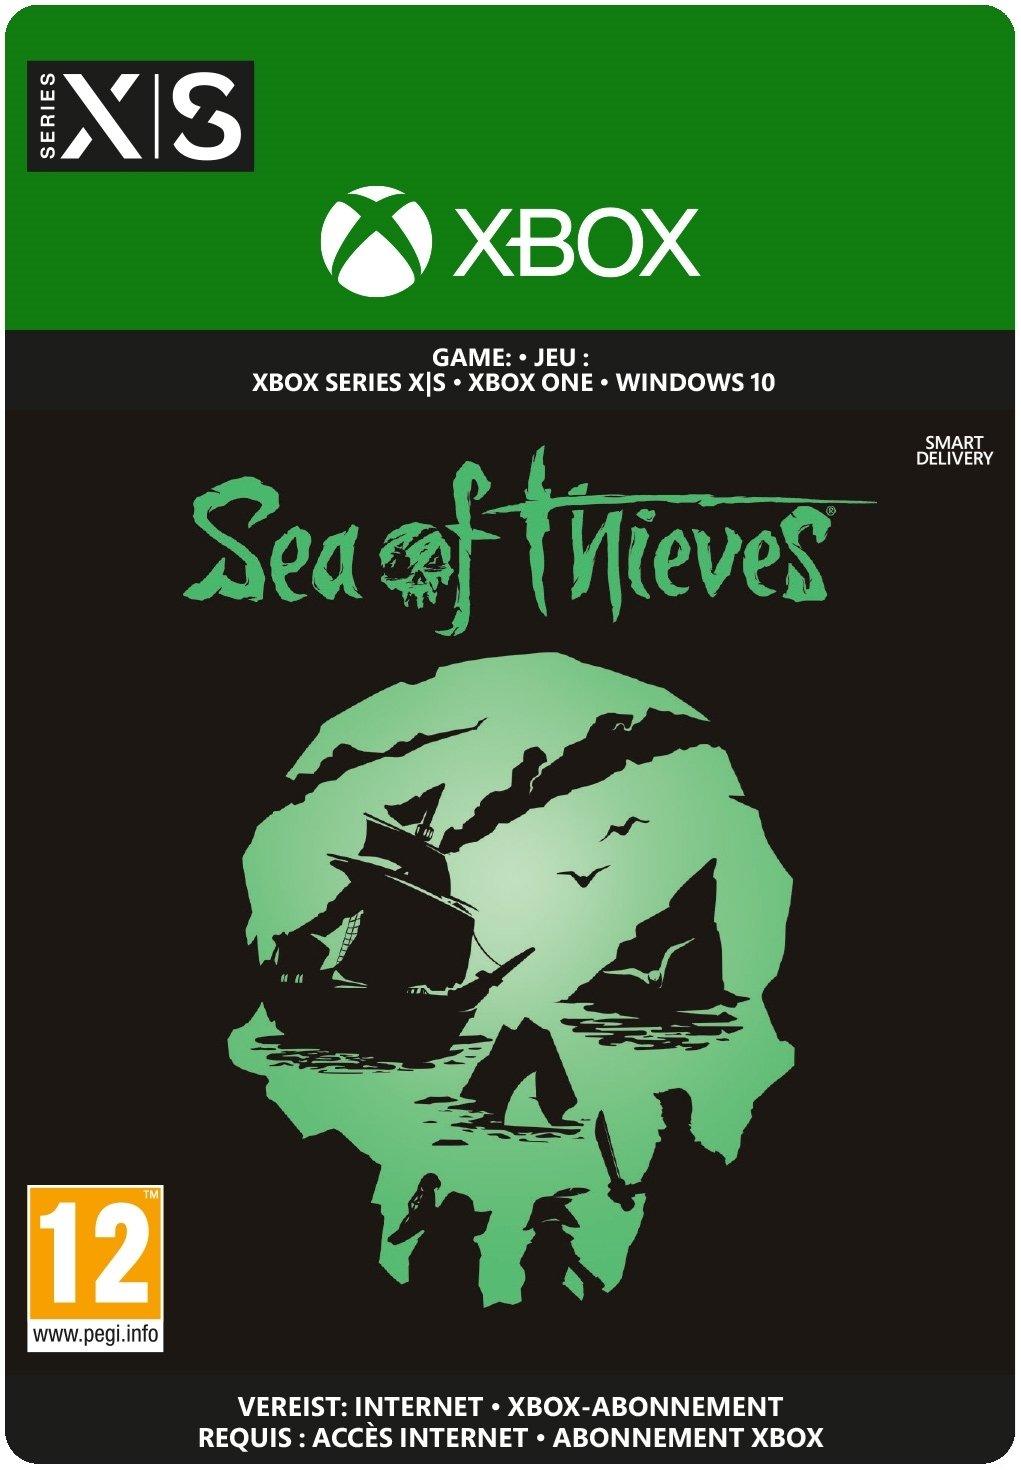 Sea of Thieves - Xbox Series X/Xbox One/Win10 - Game | G7Q-00121 (84e89876-ae61-c047-98a3-134afefa1029)